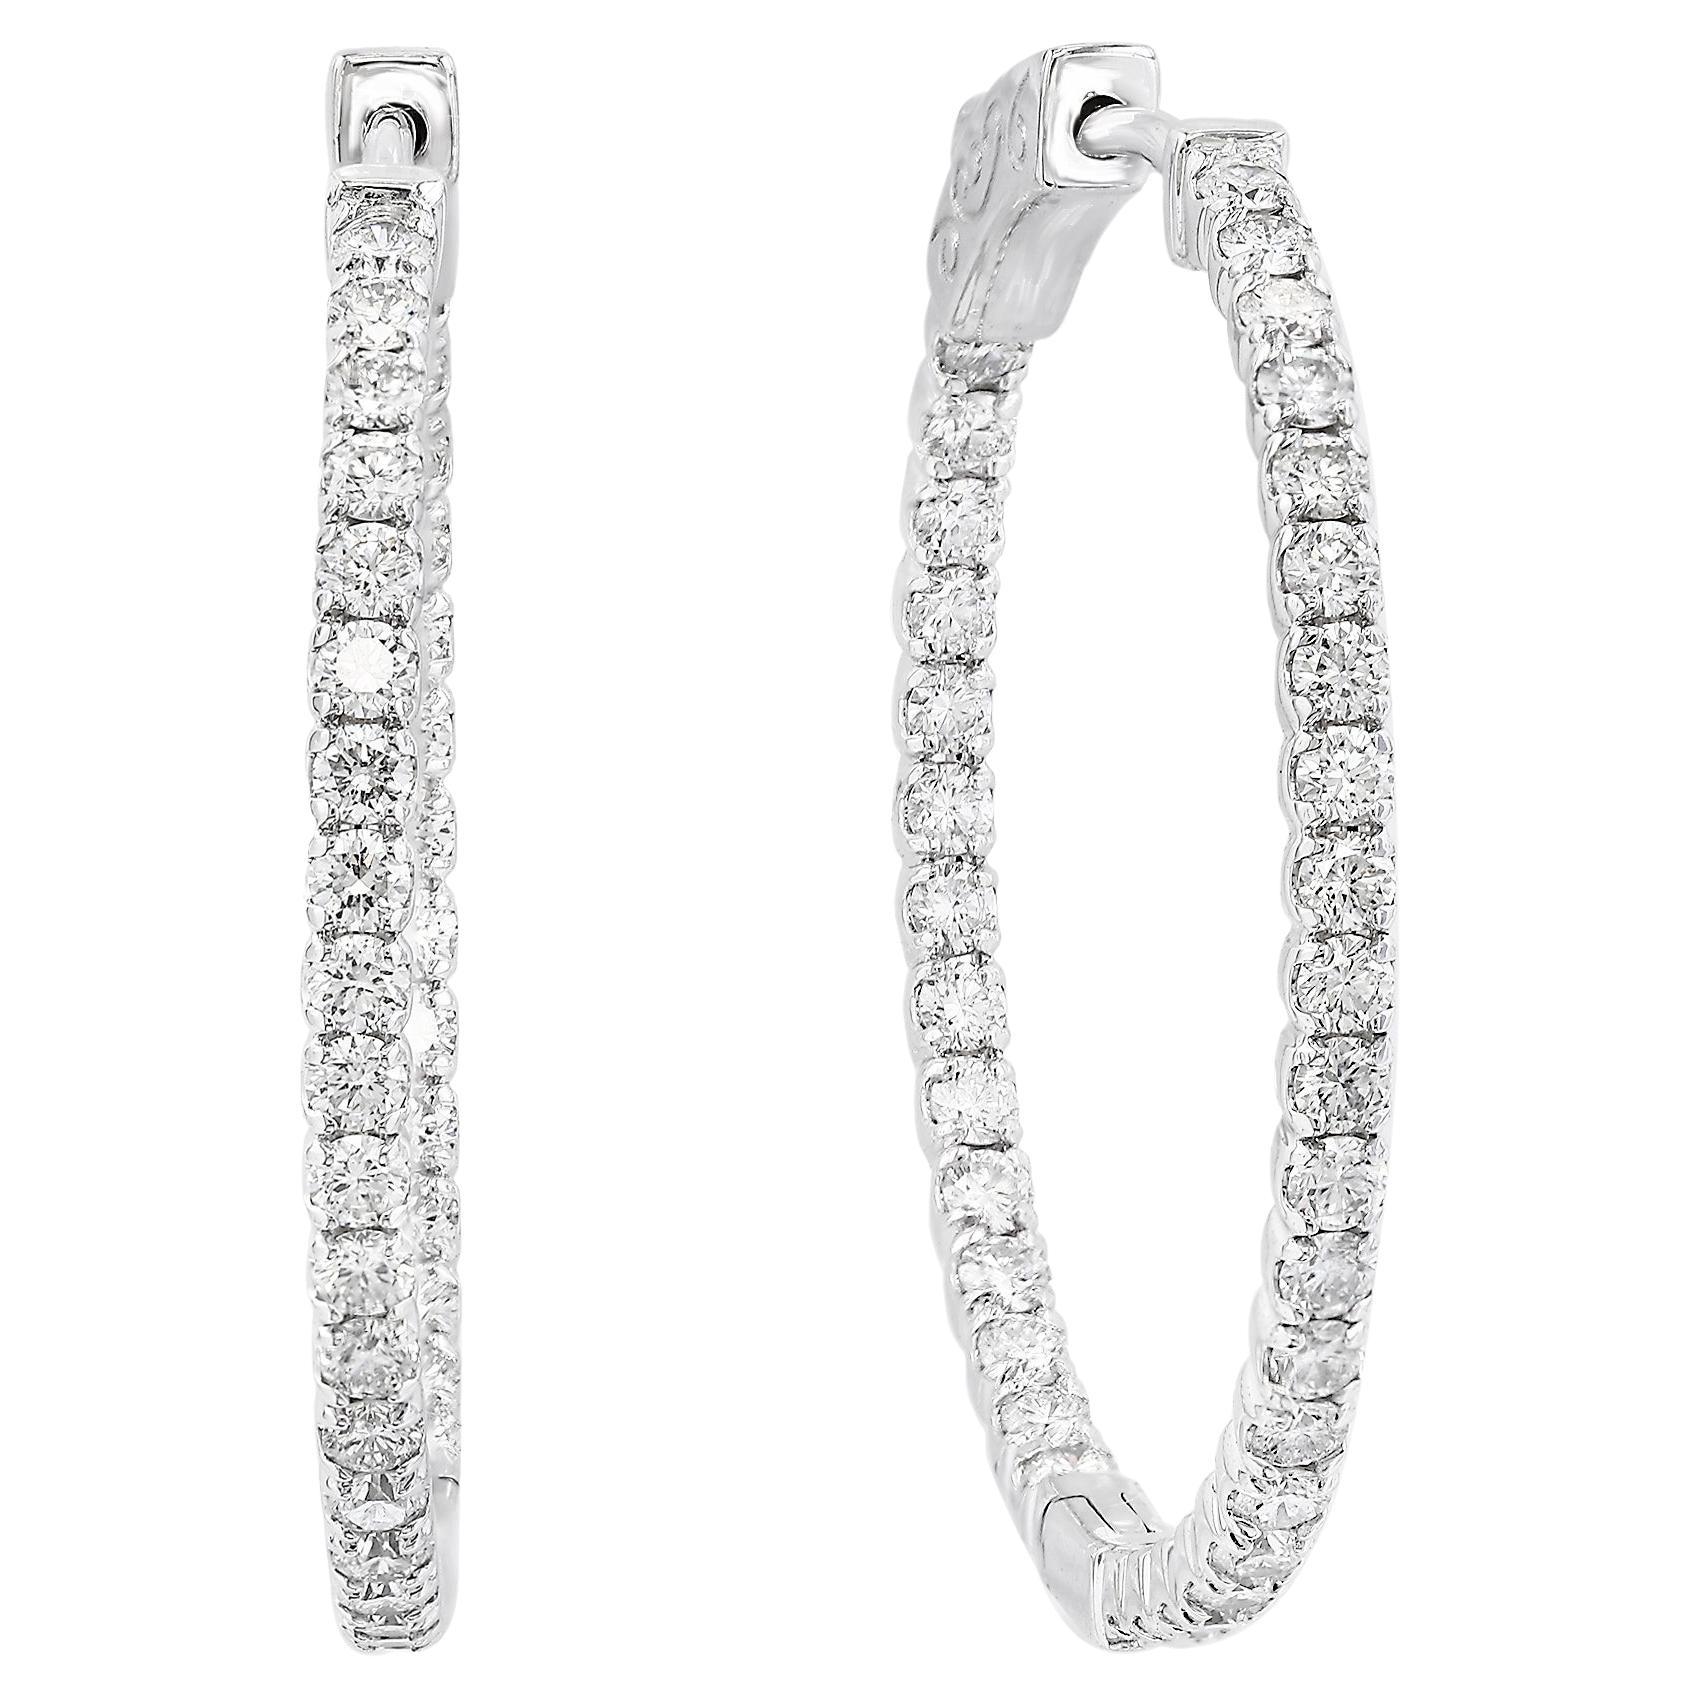 1.53 Carat Round cut Diamond Hoop Earrings in 14K White Gold For Sale